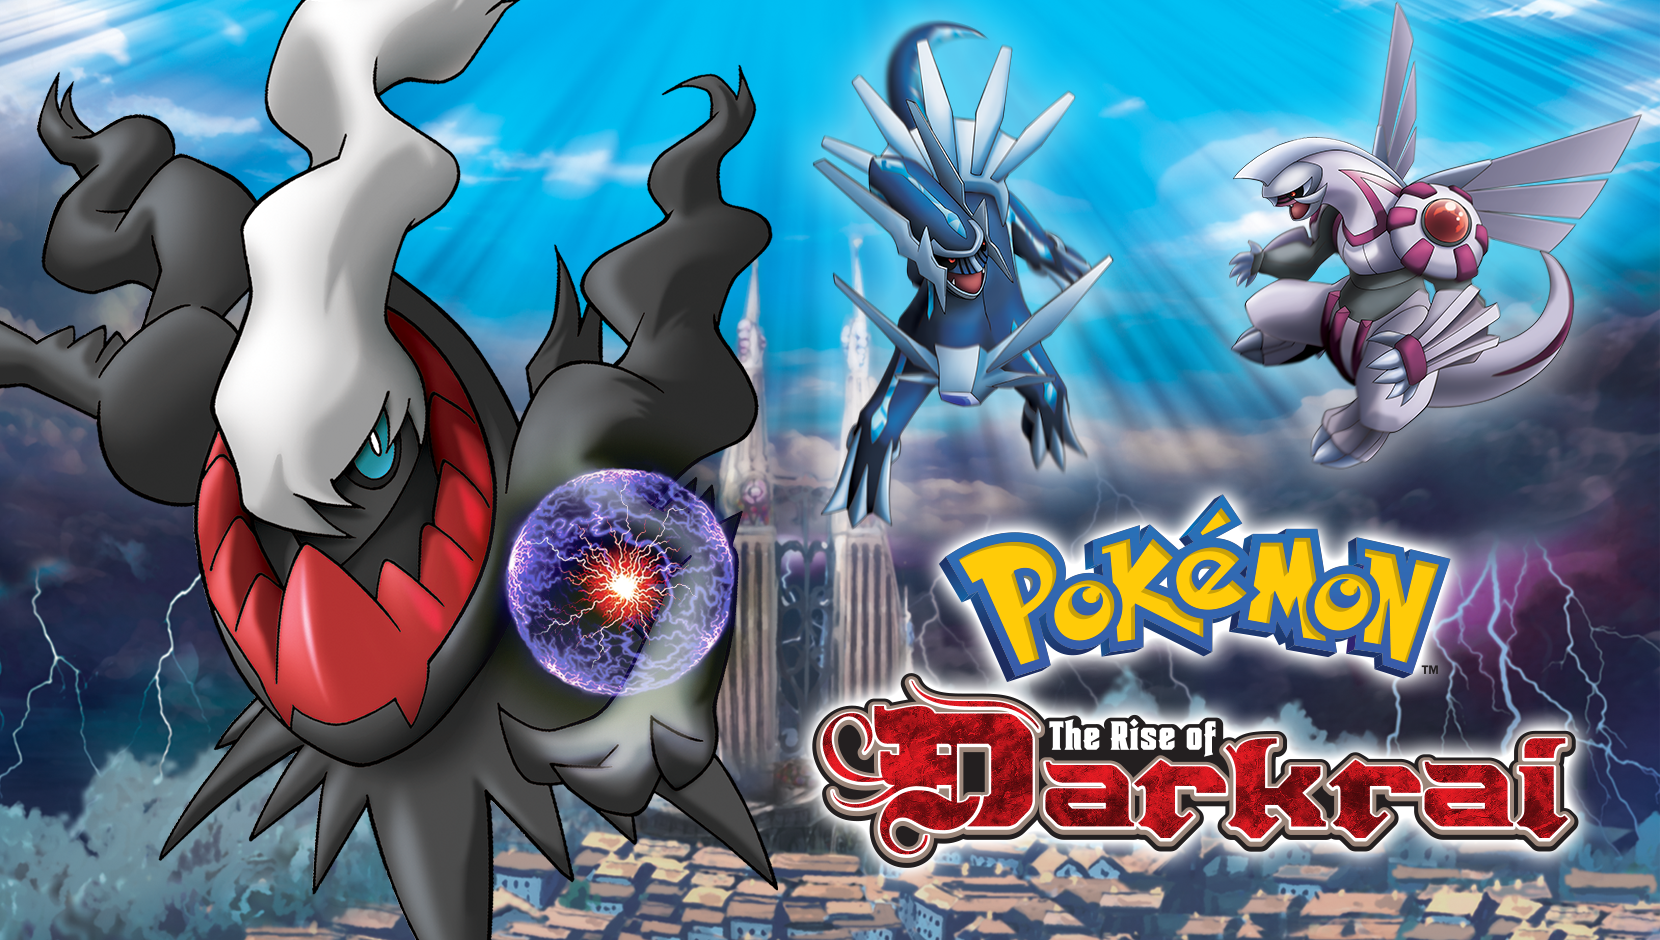 Pokémon 14: Preto & Branco – Dublado Todos os Episódios - Anime HD - Animes  Online Gratis!